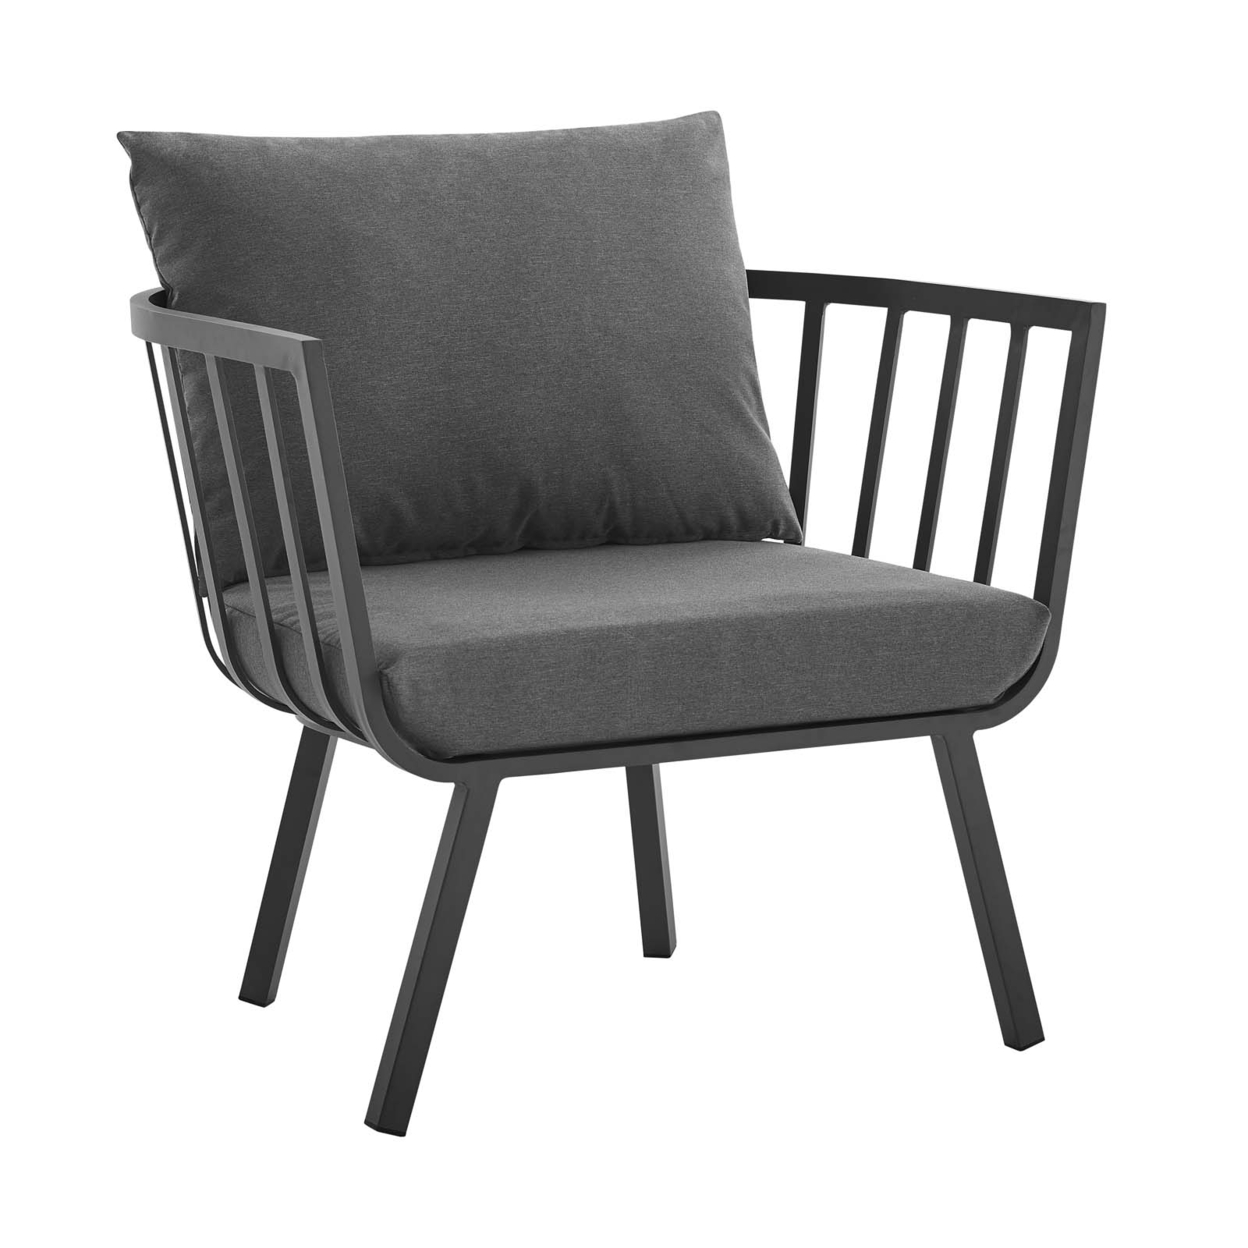 Riverside Outdoor Patio Aluminum Armchair,Gray Charcoal